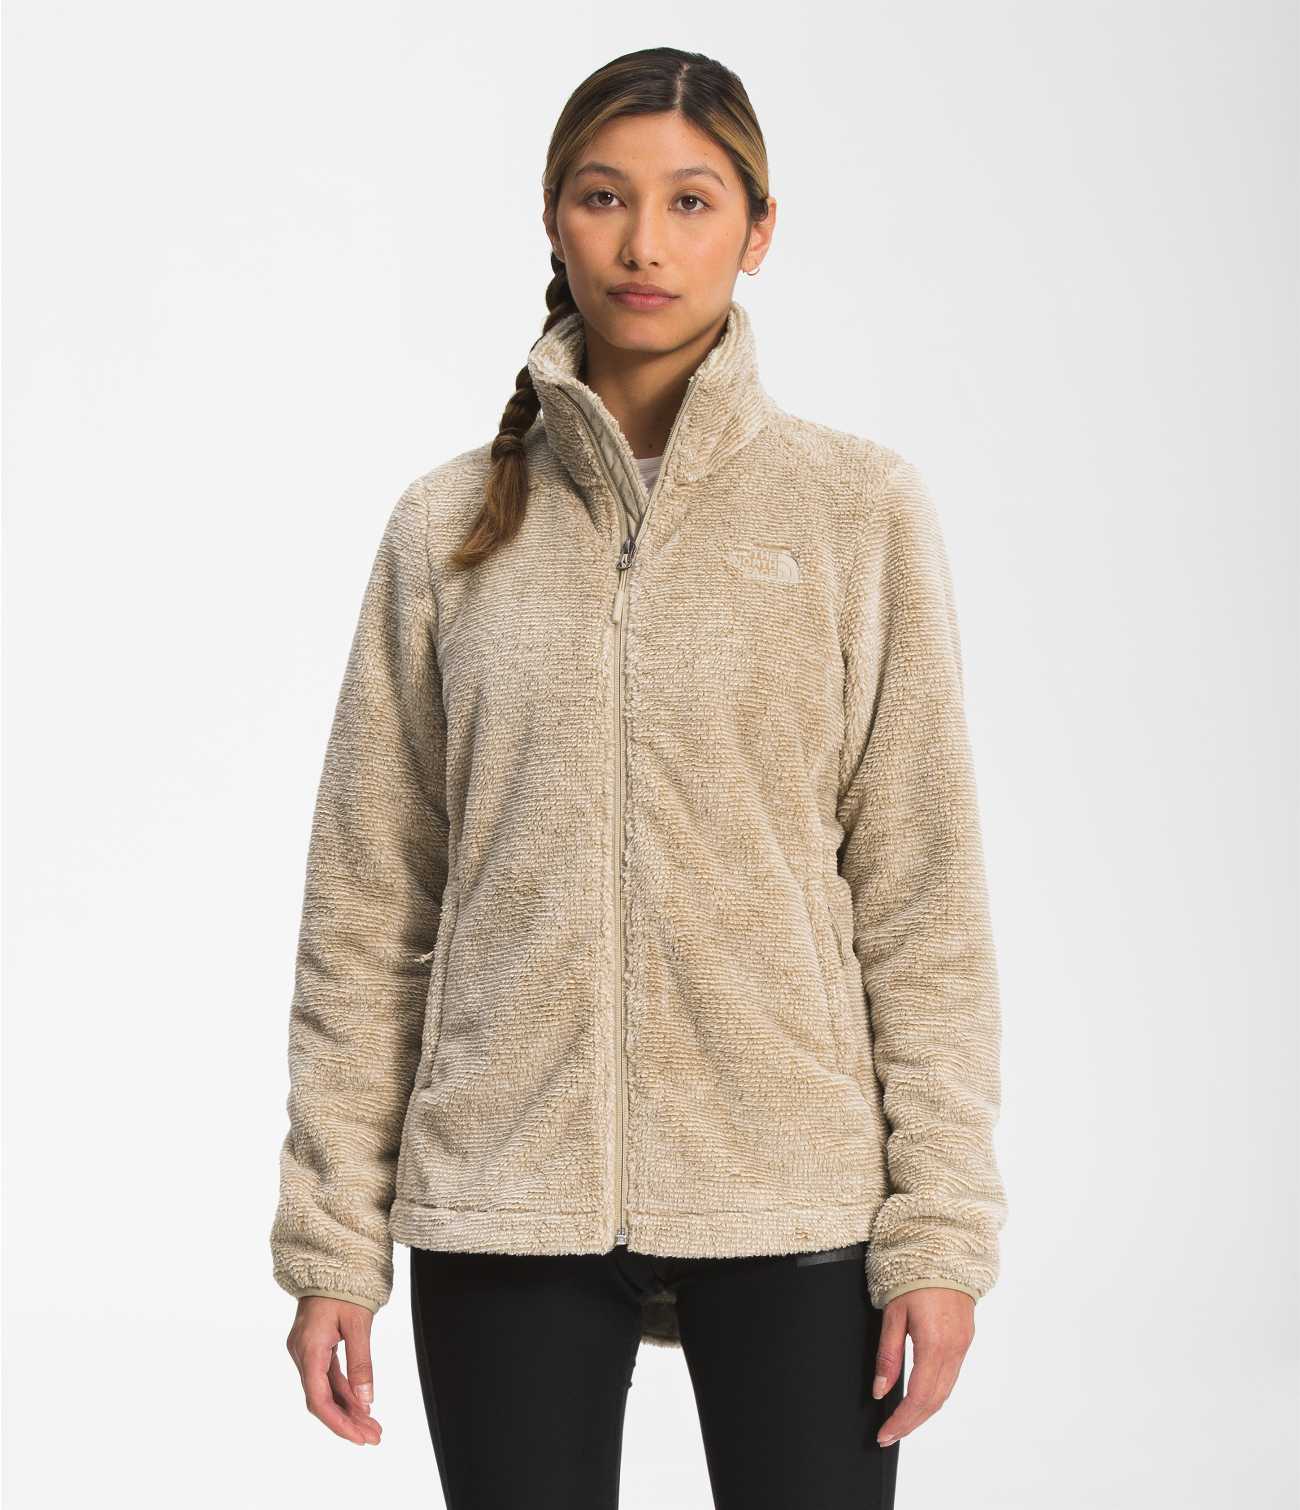 The North Face OSITO Fleece Full Zipper Jacket Women's Plus Size 2X White  $99 